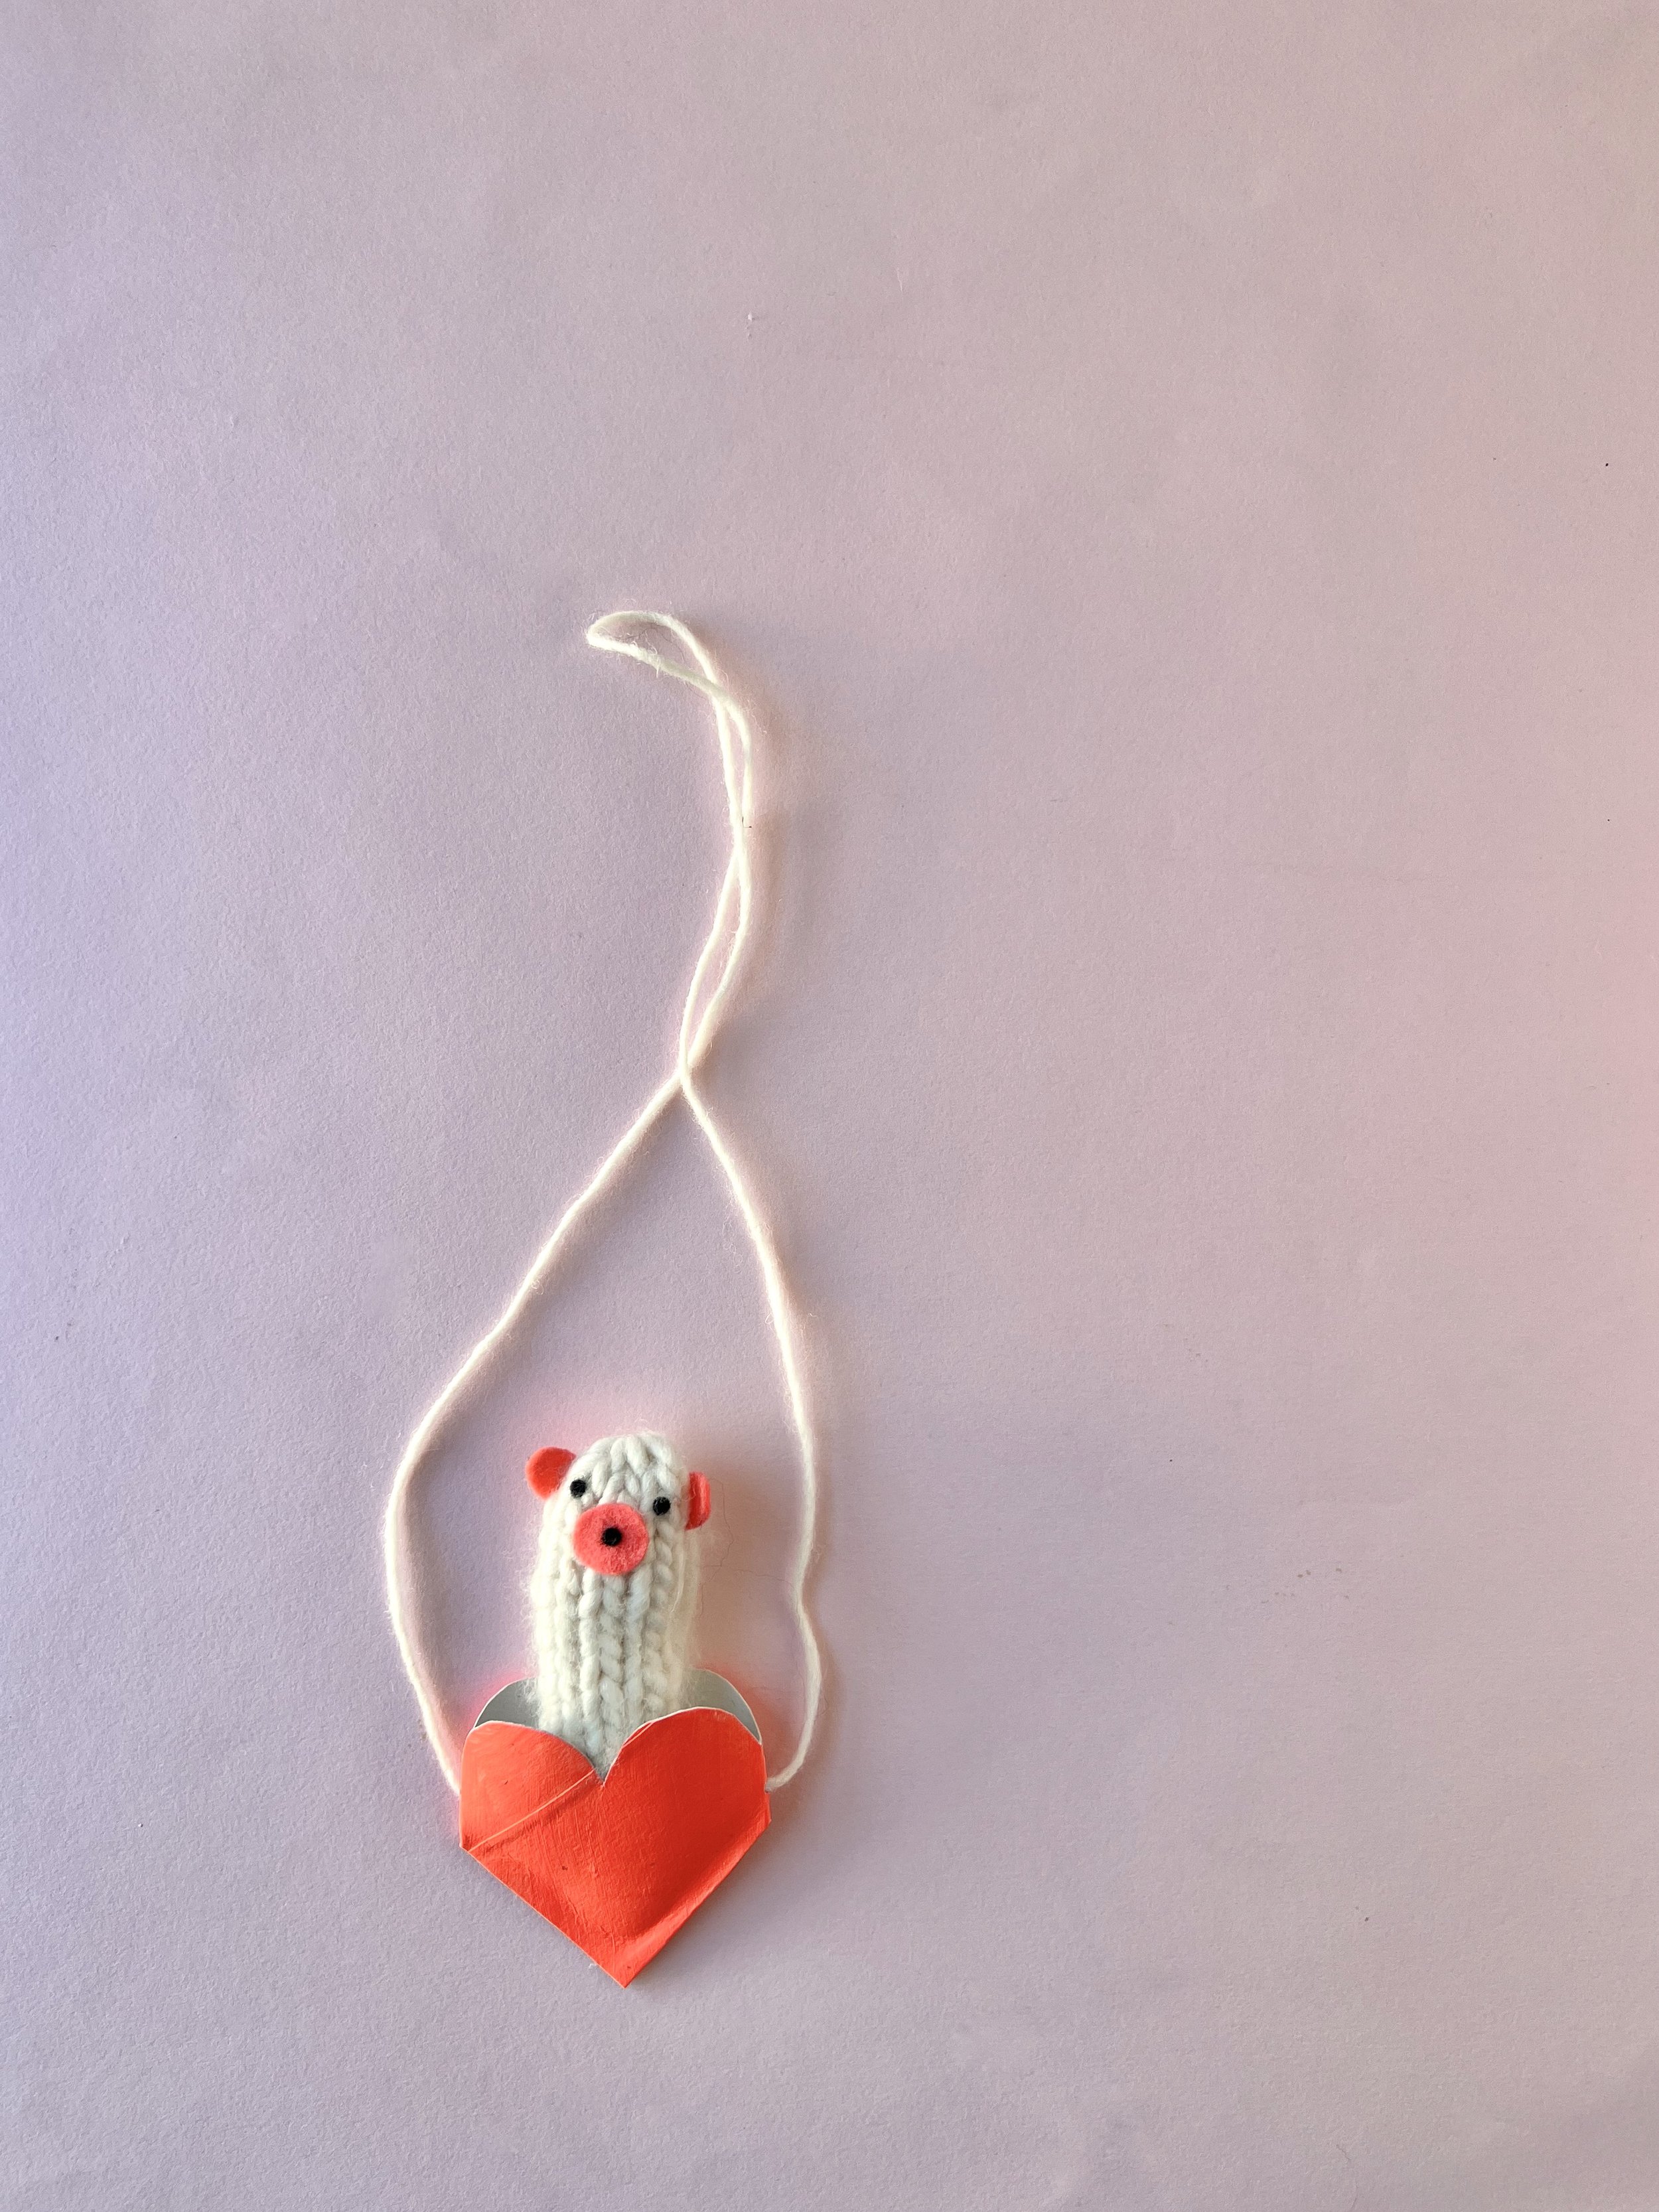 Making Stuff: Valentines Bracelets {recycled t-shirt kids craft}